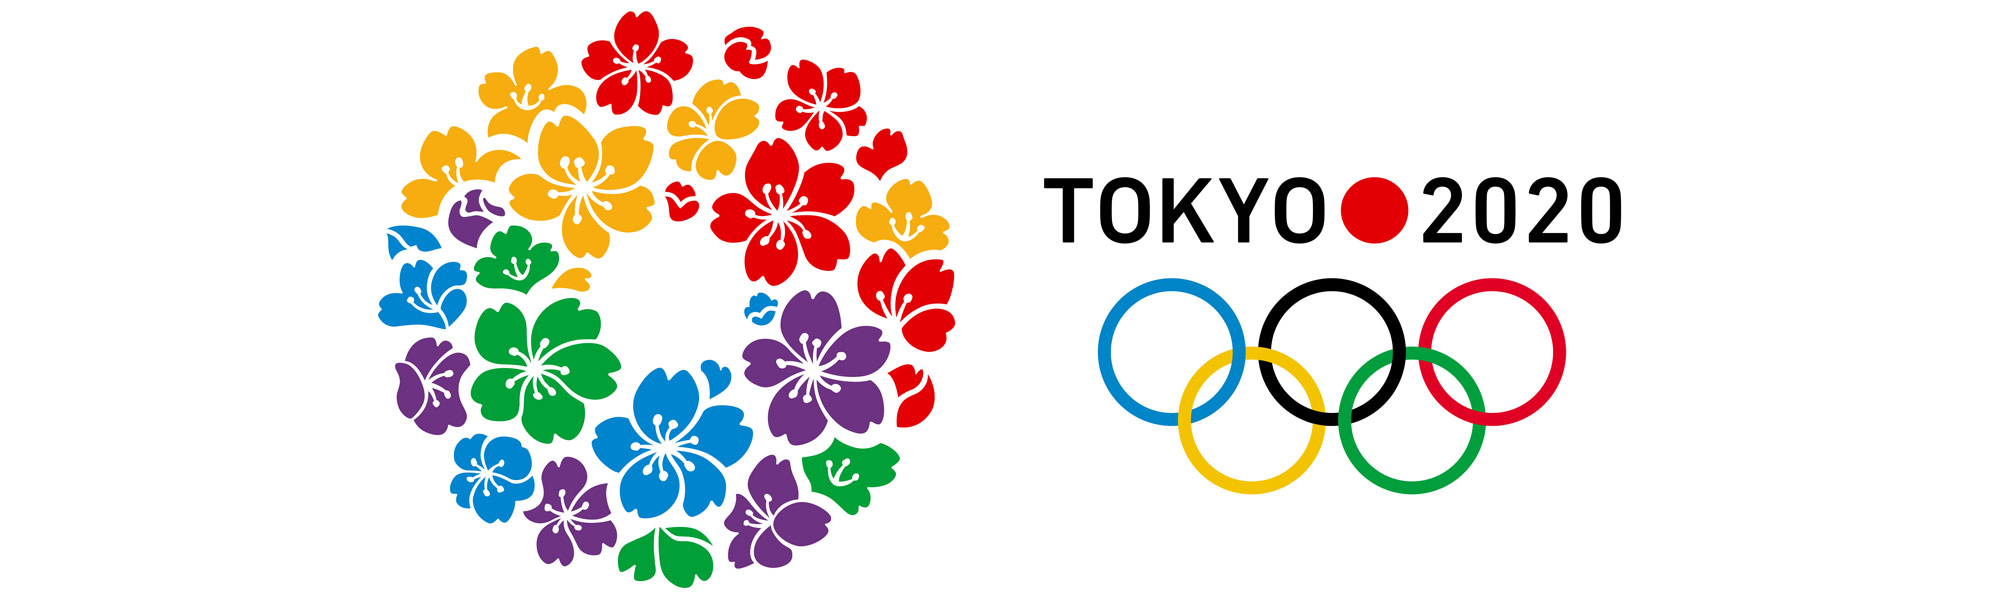 Olympic games tokyo 2020 schedule - fullryte